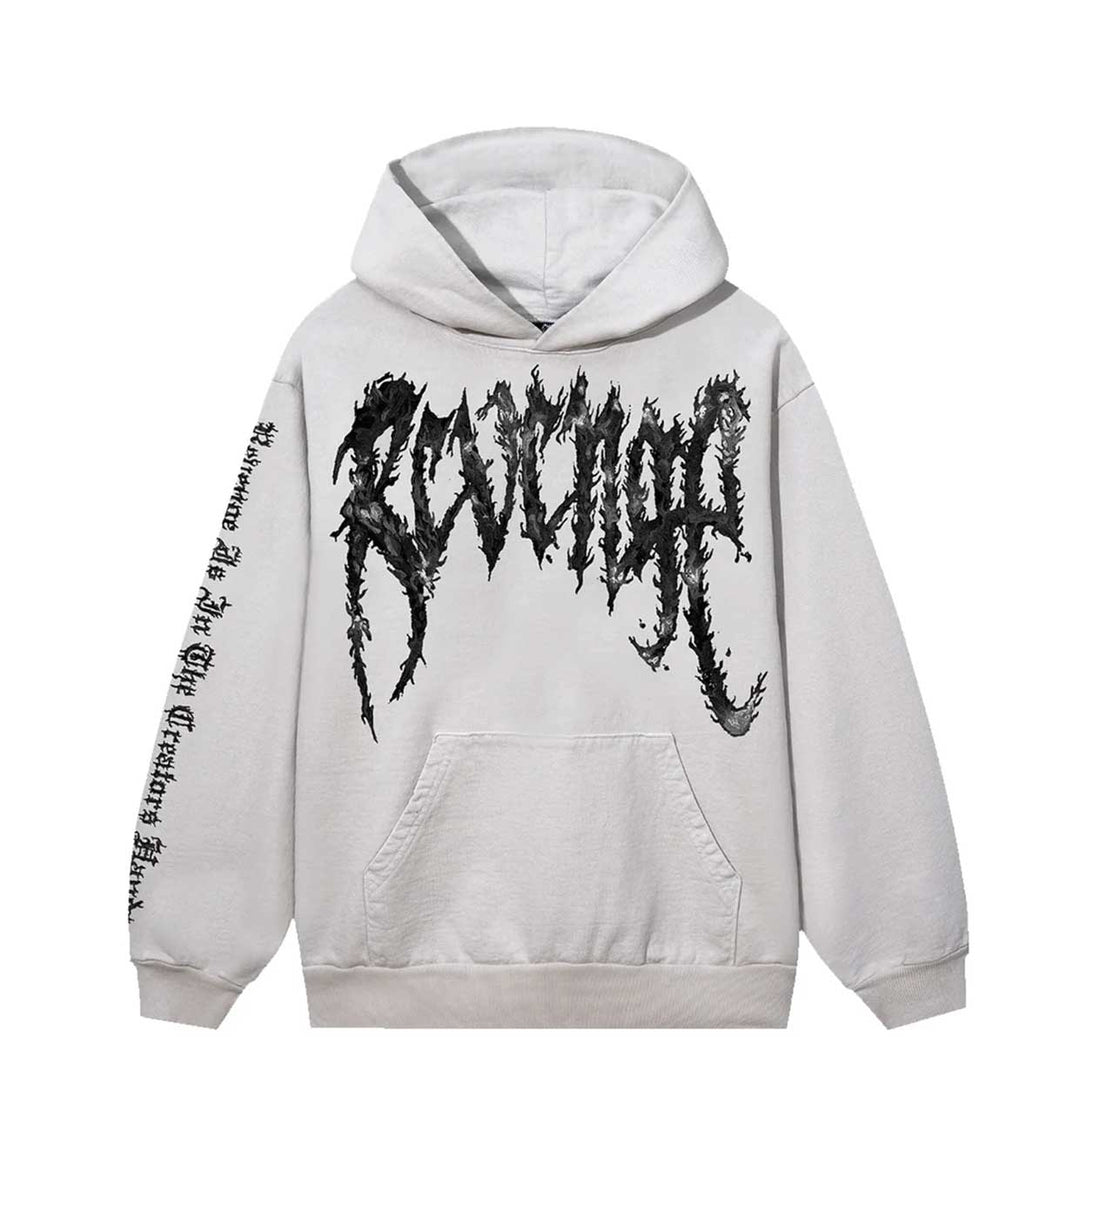 Revenge Angel hoodie X xxxtentacion hoodie